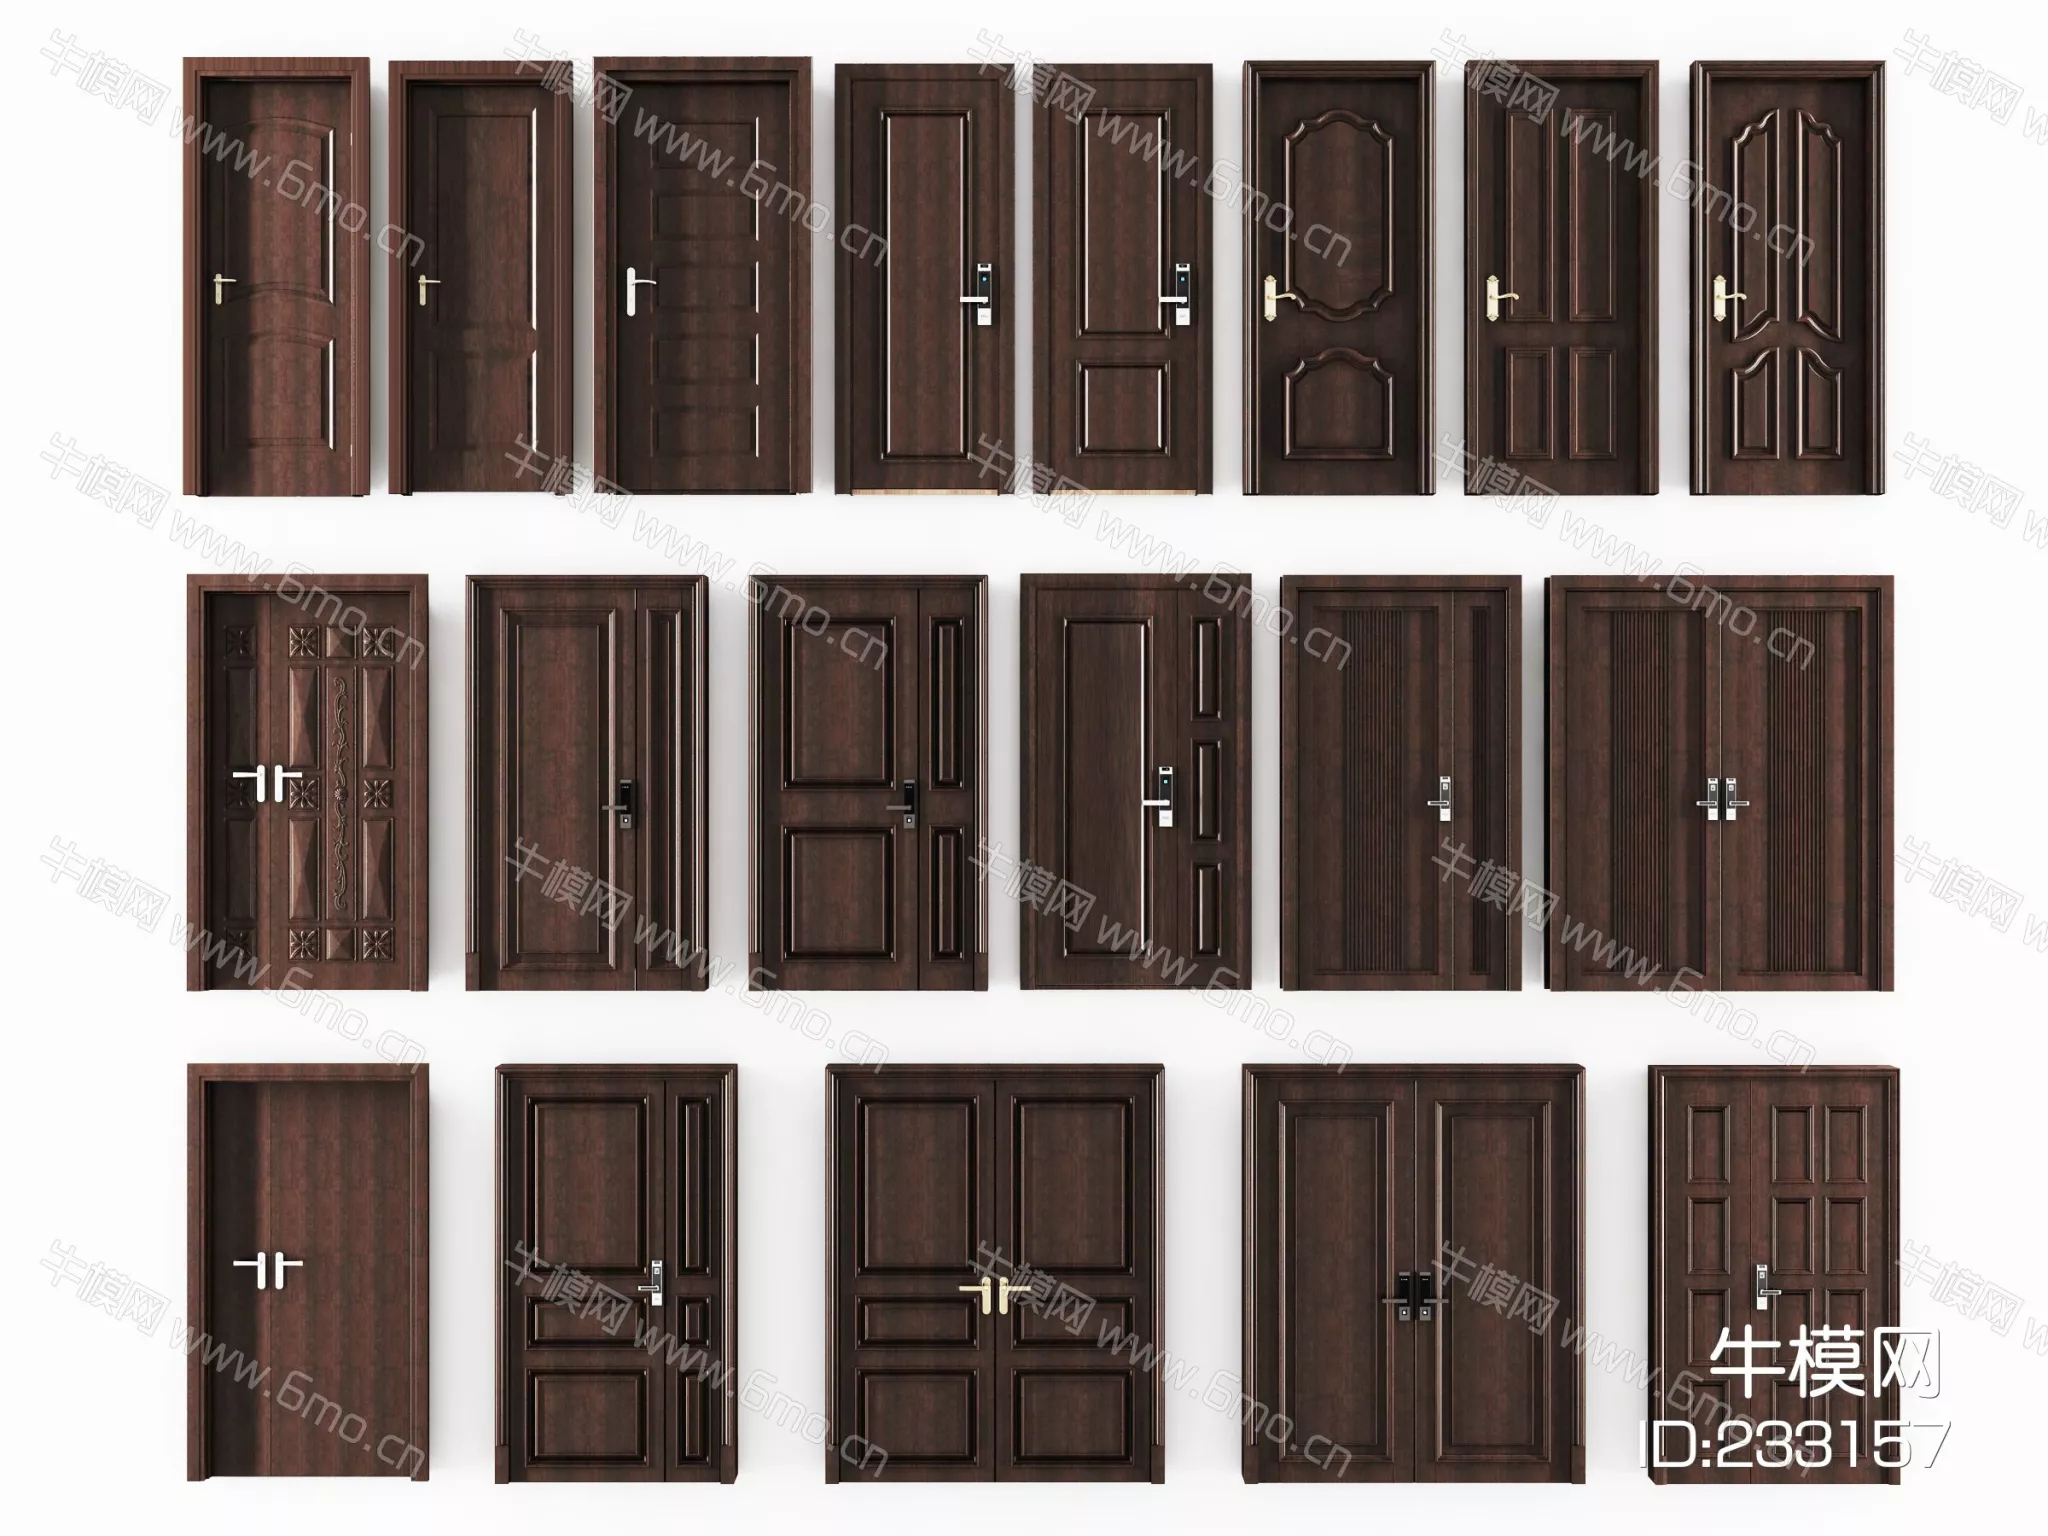 MODERN DOOR AND WINDOWS - SKETCHUP 3D MODEL - ENSCAPE - 233157